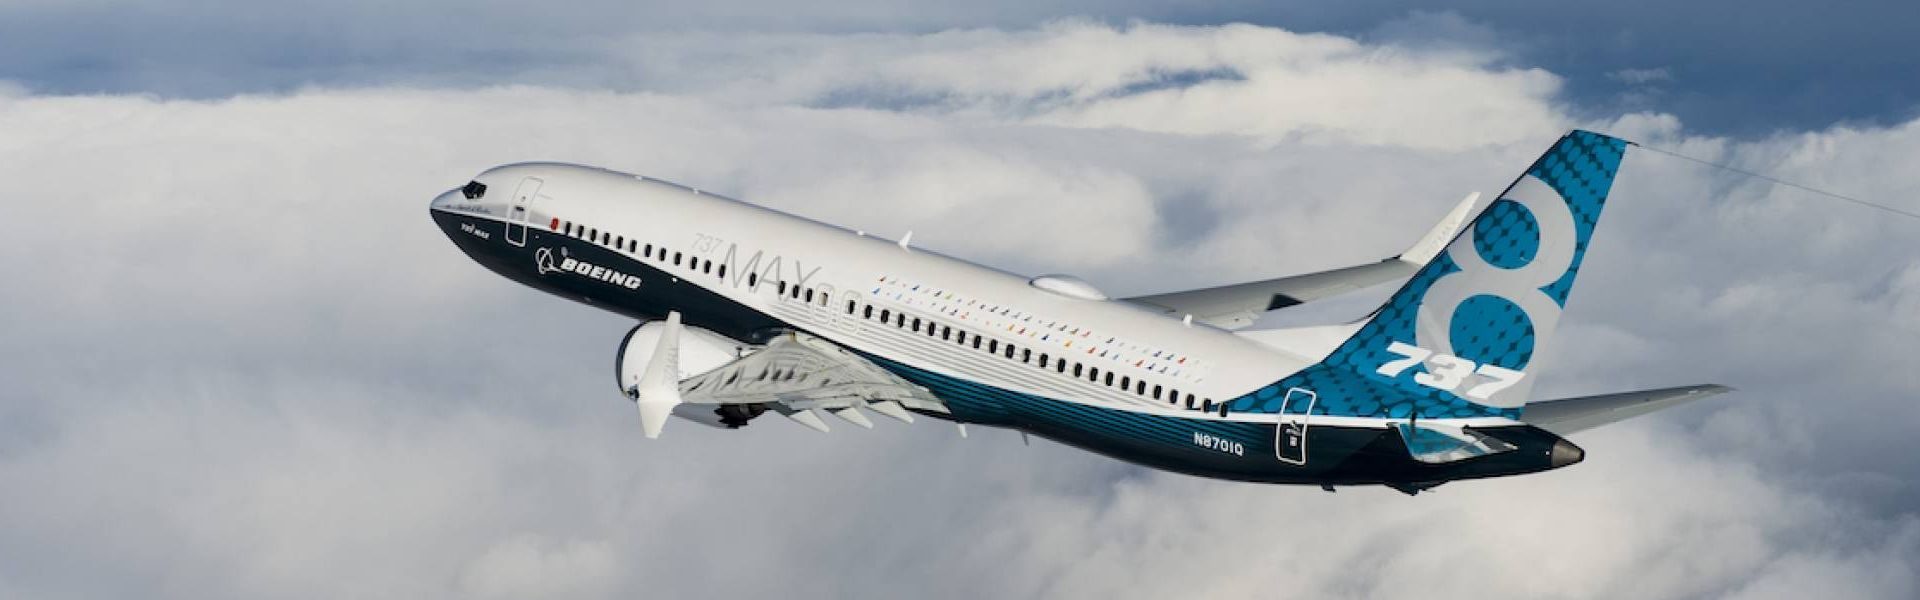 Boeing сокращает выпуск 737 MAX до минимума  Авиация